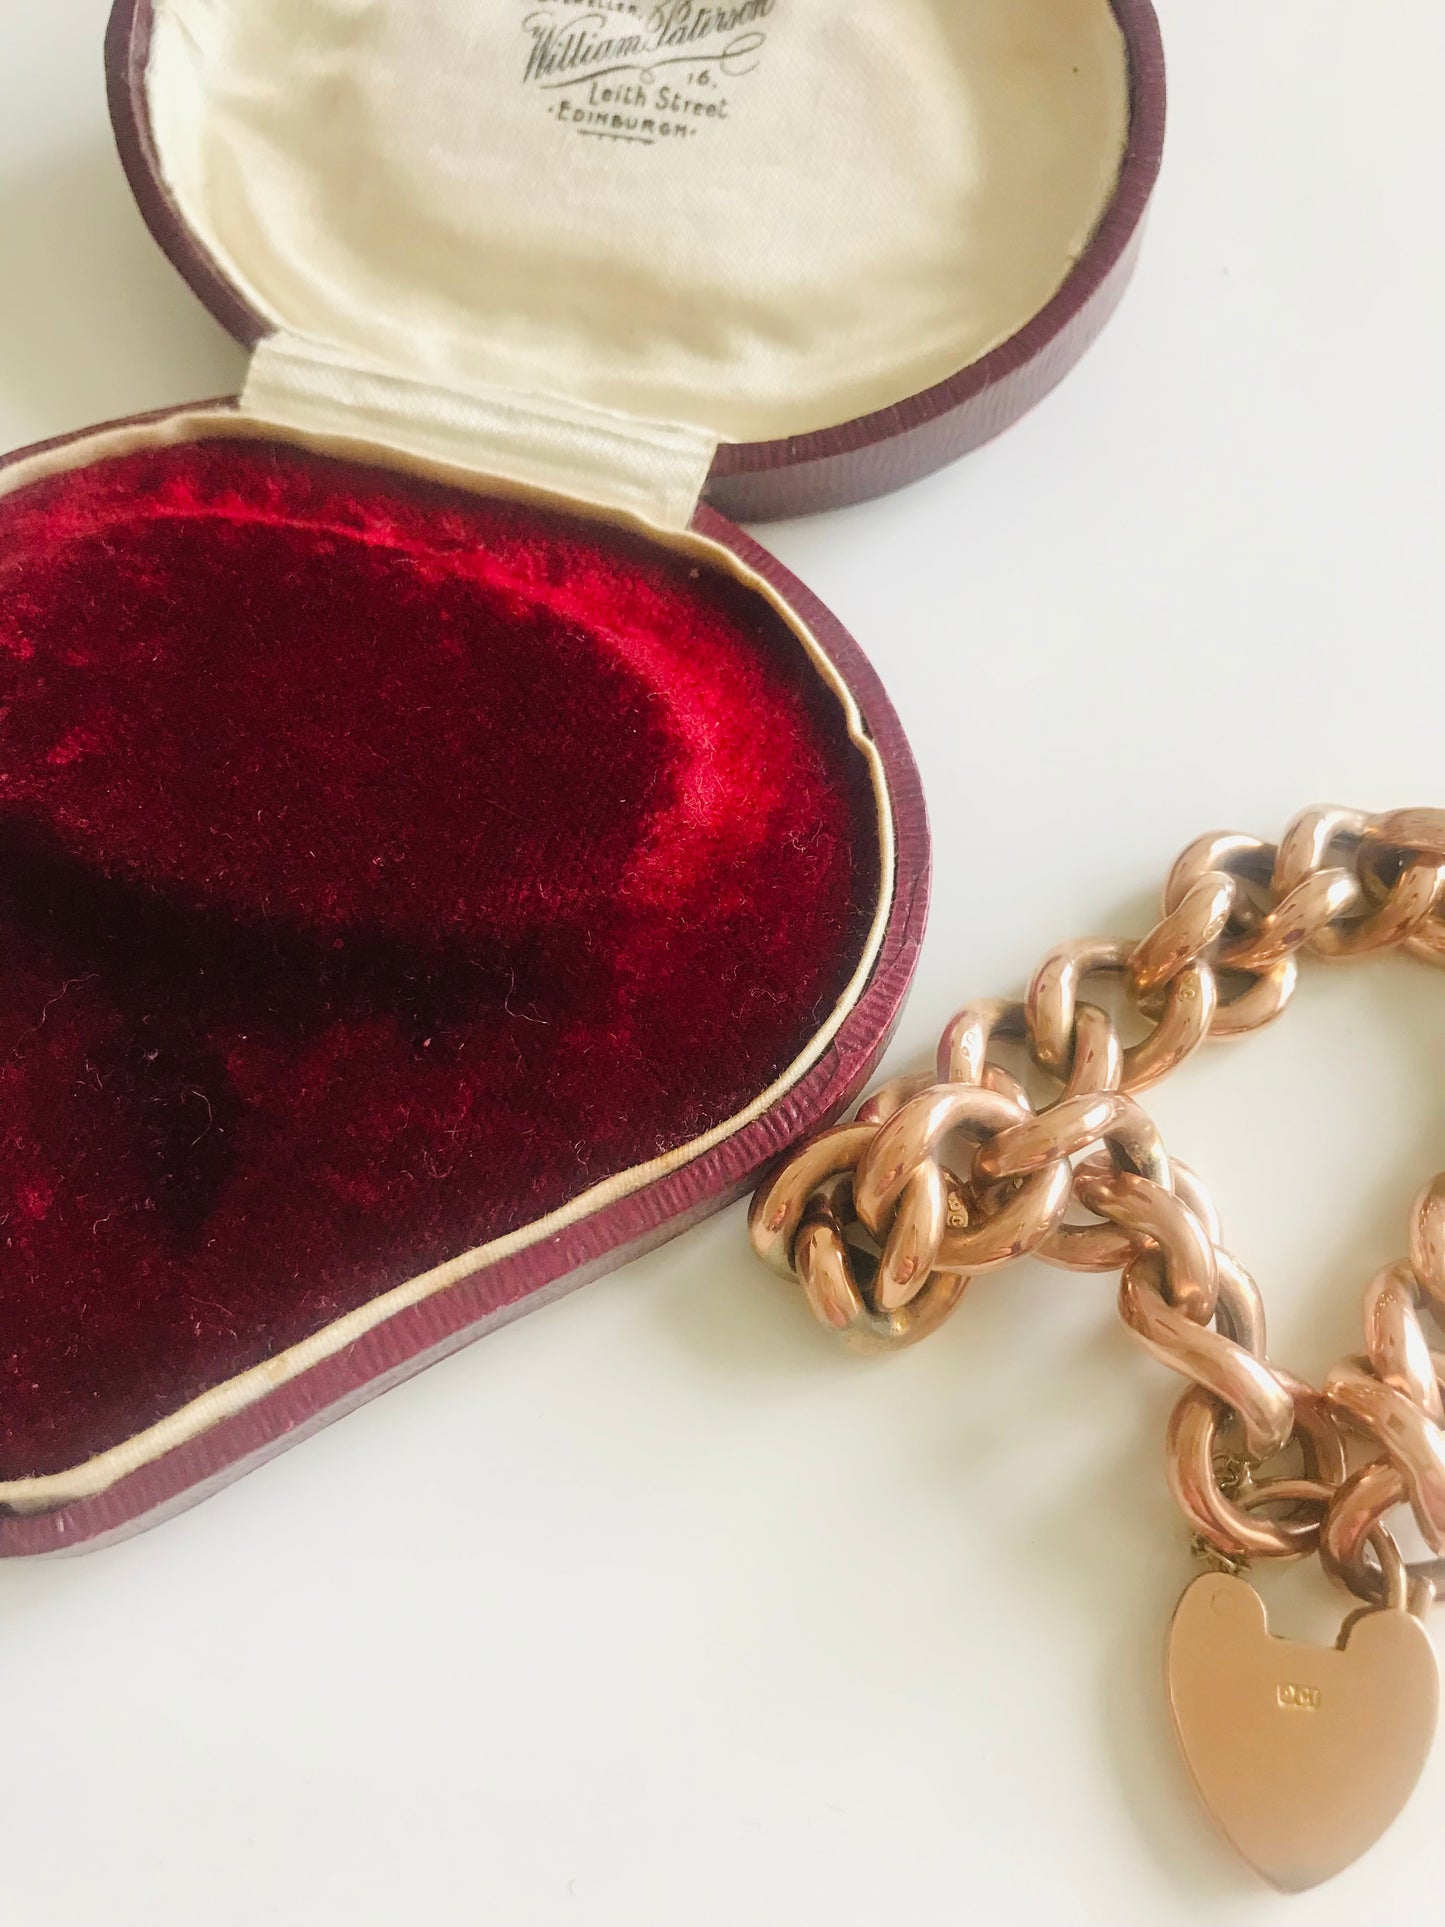 Chunky 9ct Gold Charm Bracelet in original red heart presentation box